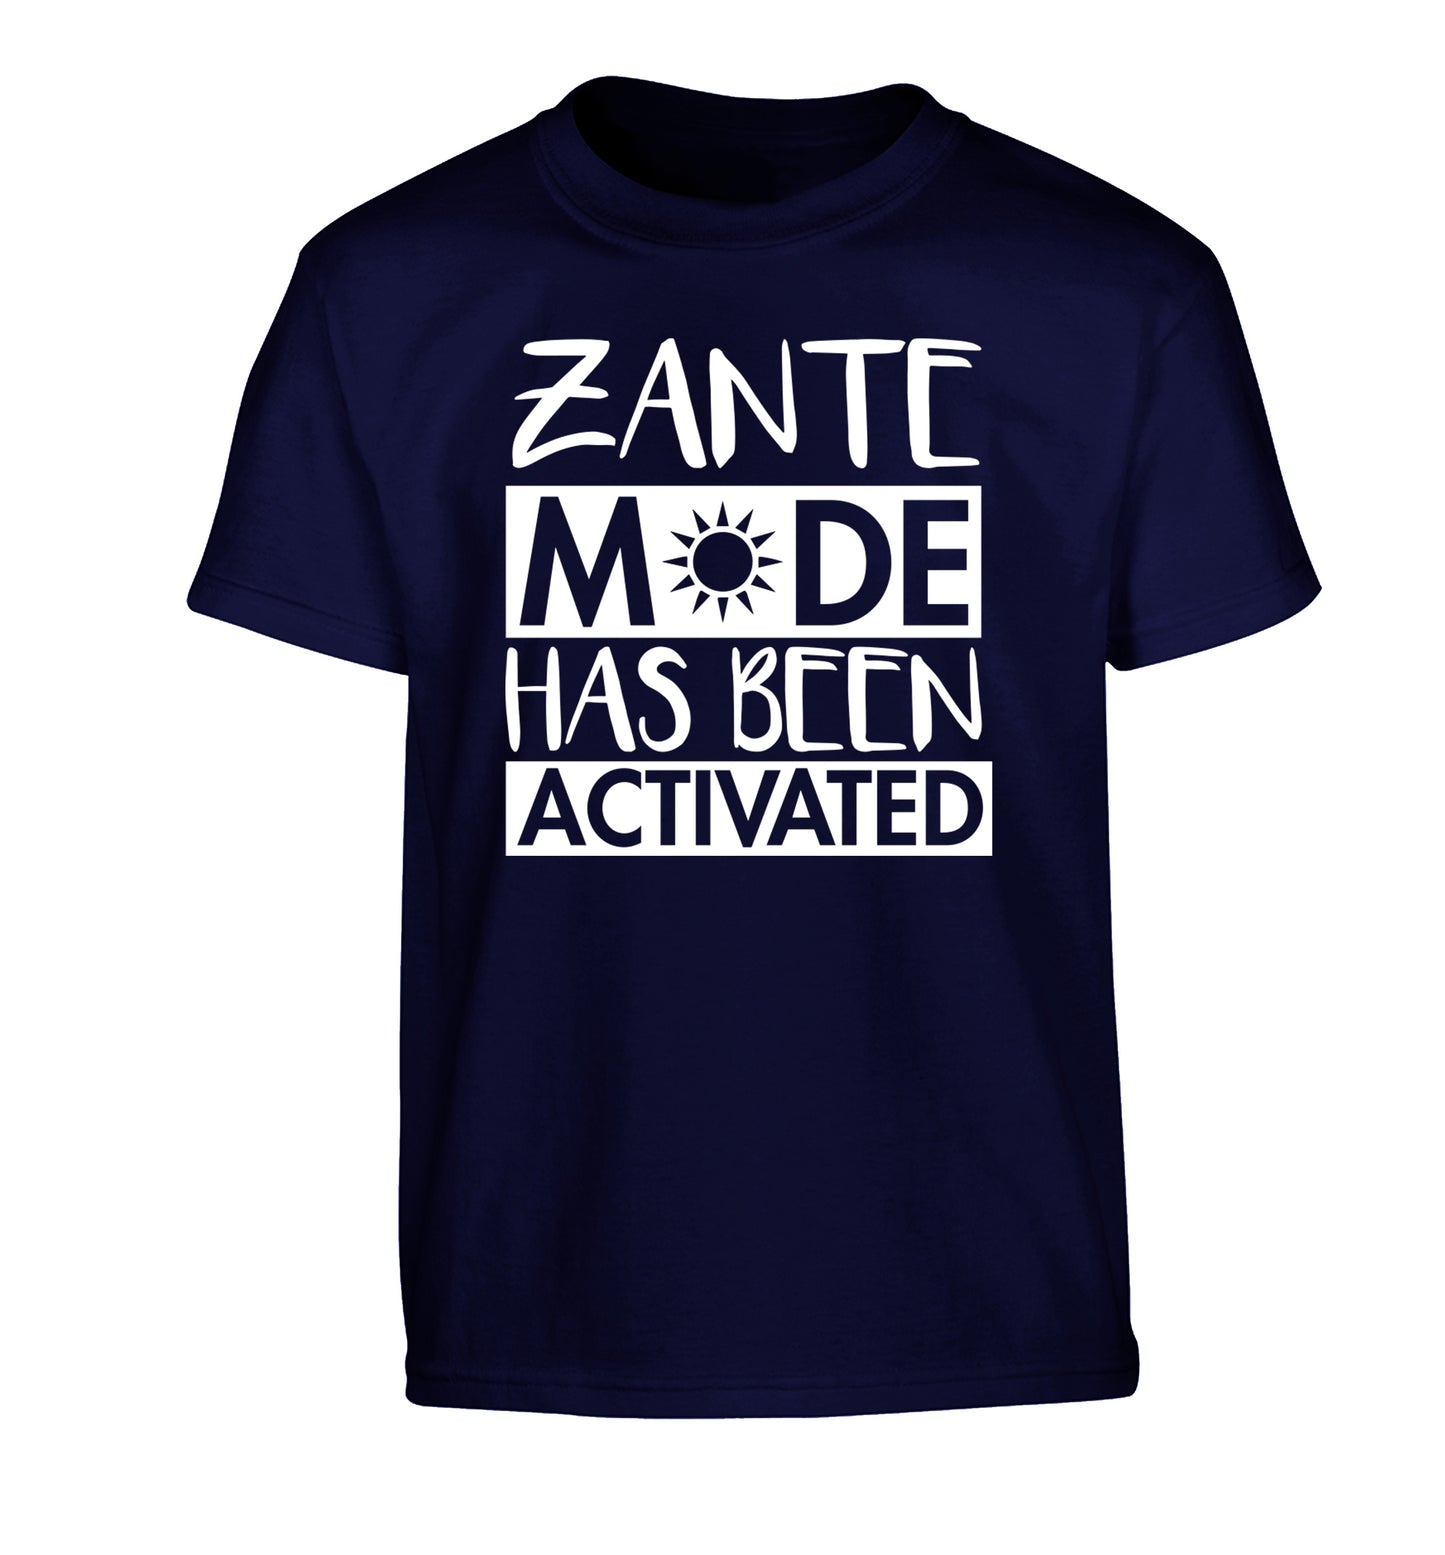 Zante mode has been activated Children's navy Tshirt 12-13 Years